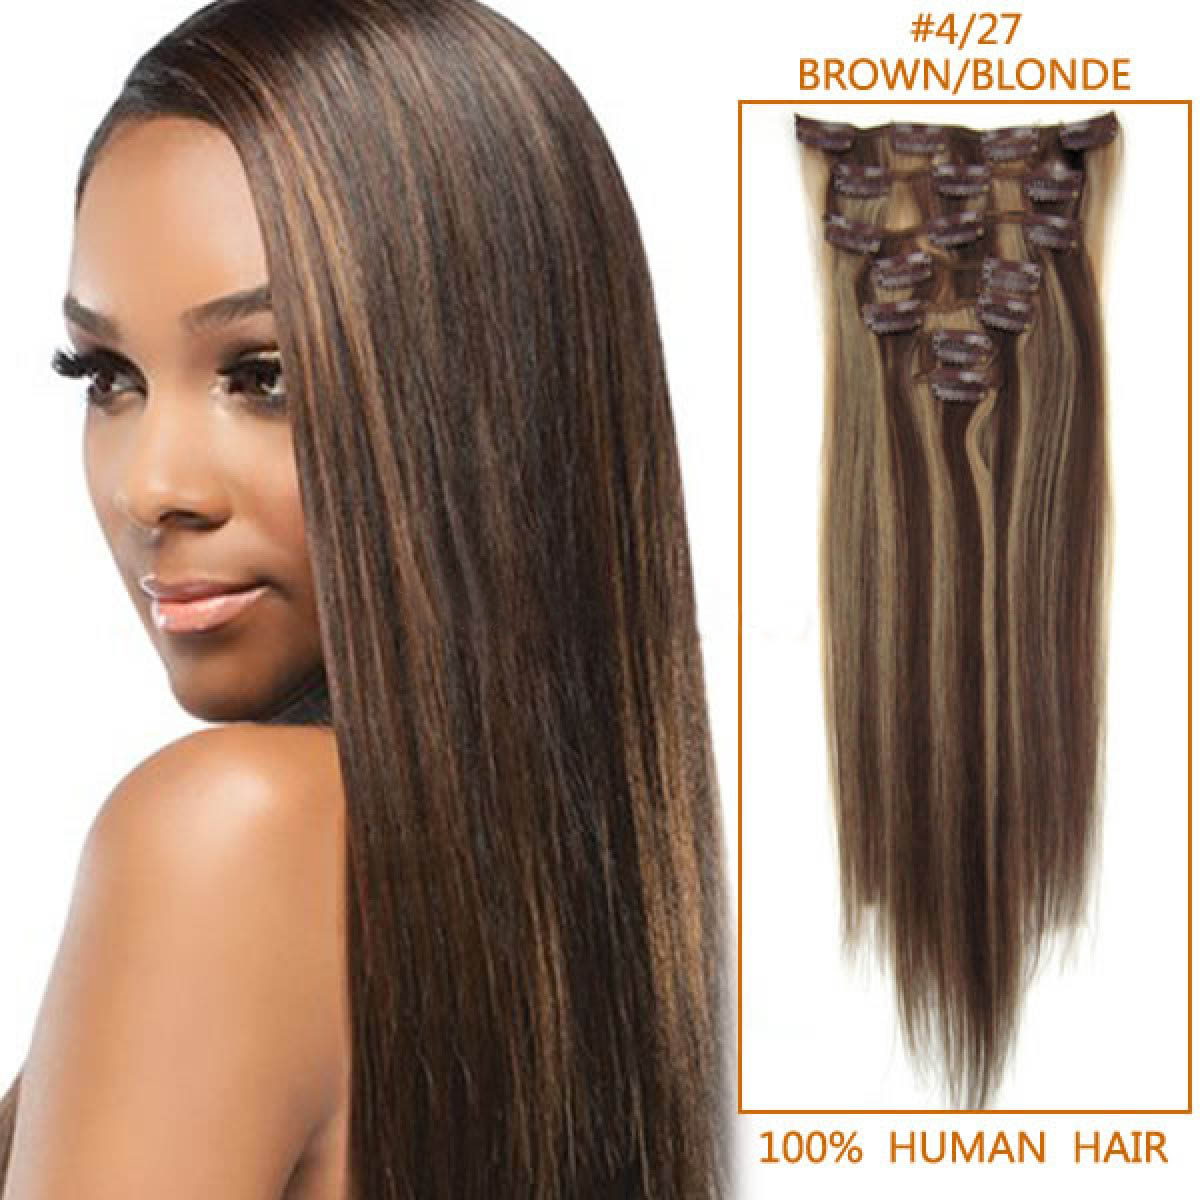 15 Inch #4/27 Brown/Blonde Clip In Human <b>Hair Extensions</b> 7pcs - 15-inch--4-27-brown-blonde-clip-in-human-hair-extensions-7pcs-10849-tv